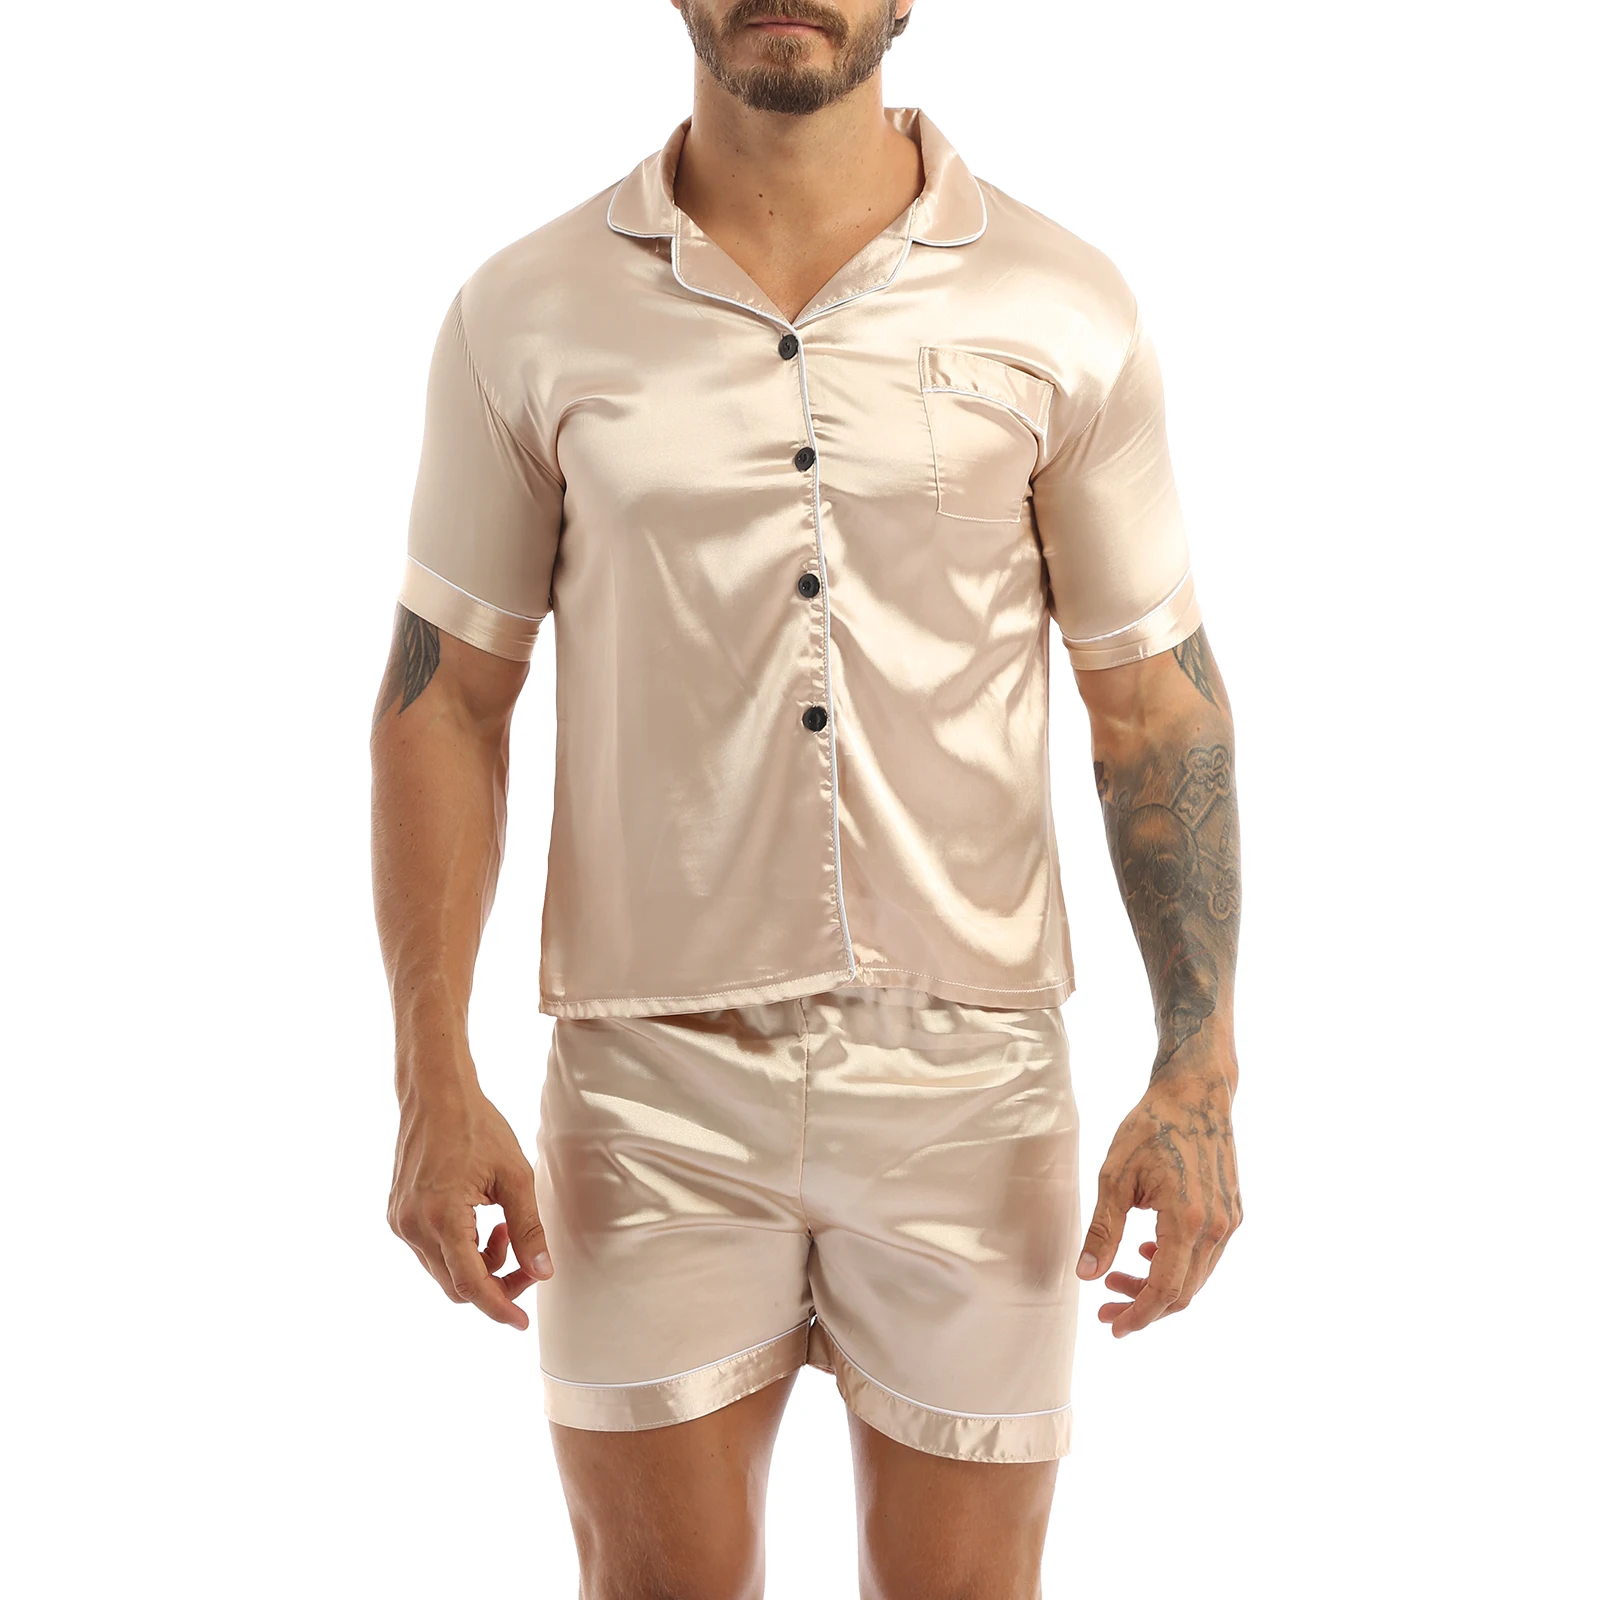 Fashion Mens Silky Satin Pajamas Set Solid Color Short Sleeves Button T-Shirt Tops with Elastic Waistband Boxer Shorts Sleepwear mens pjs sale Men's Sleep & Lounge